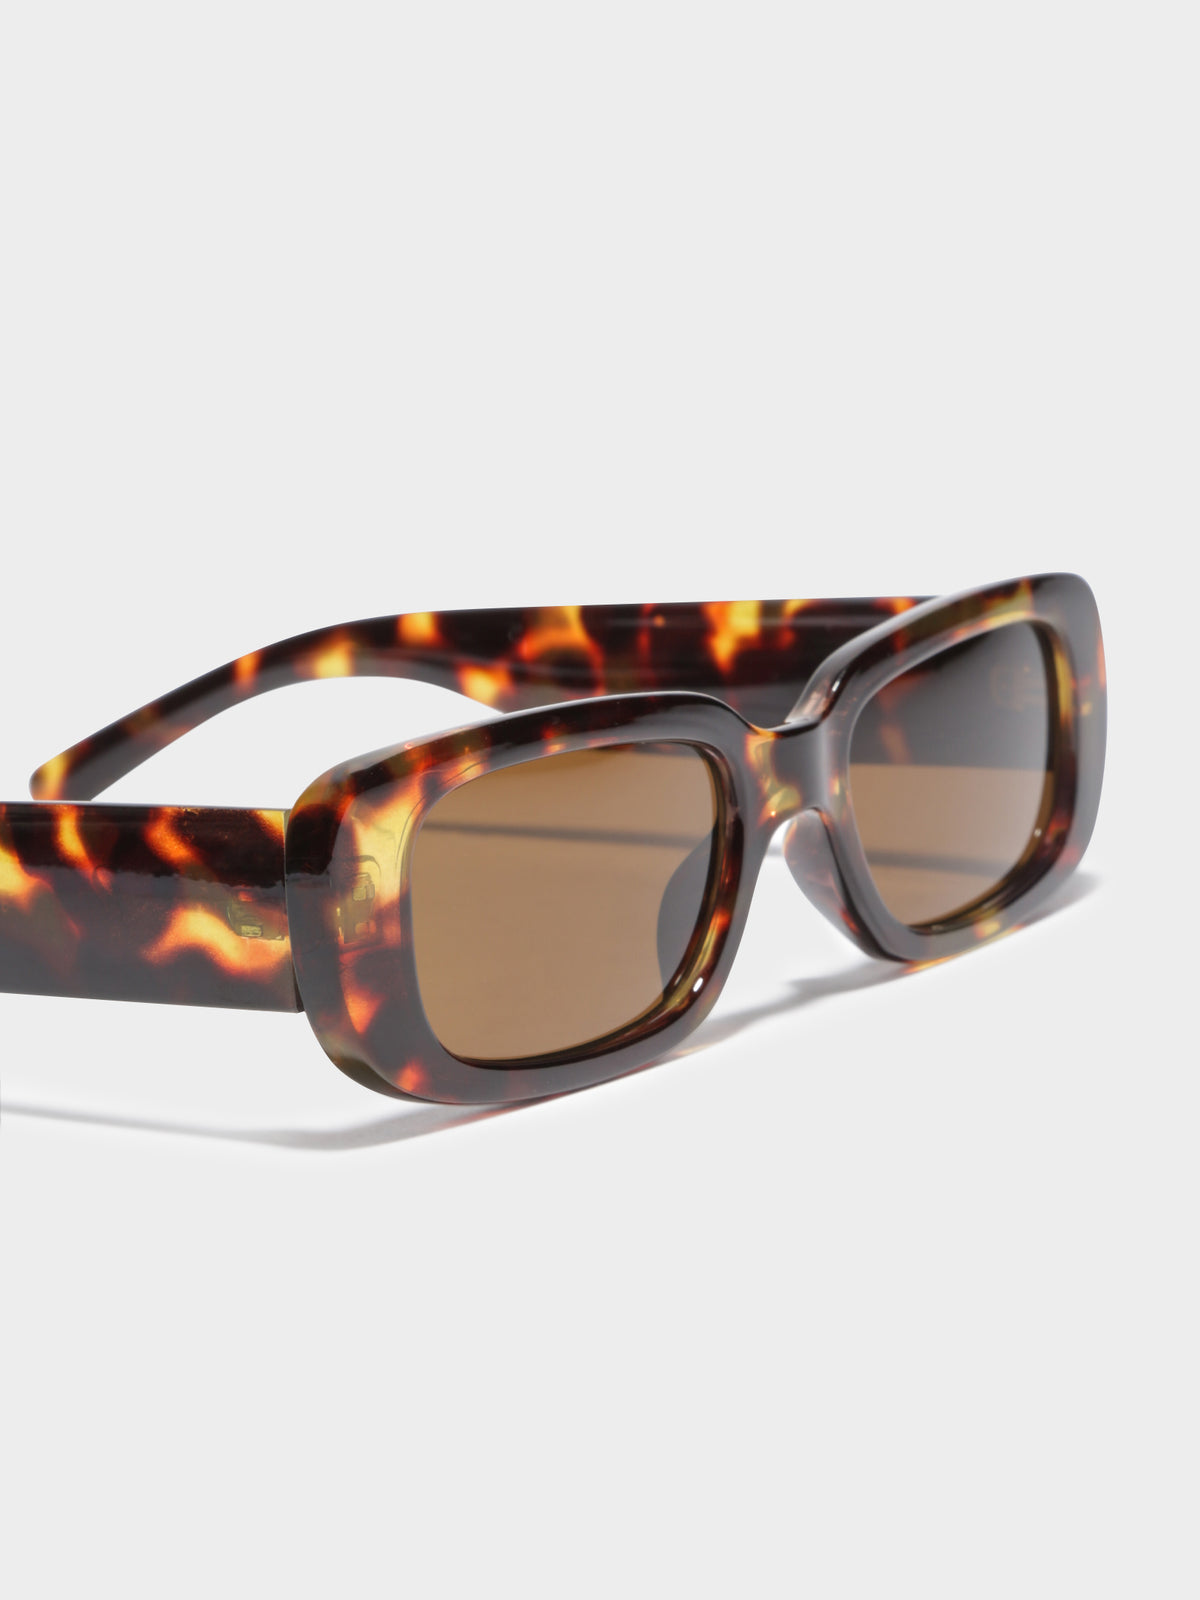 XRAY Spex Rectangle Sunglasses in Turtle